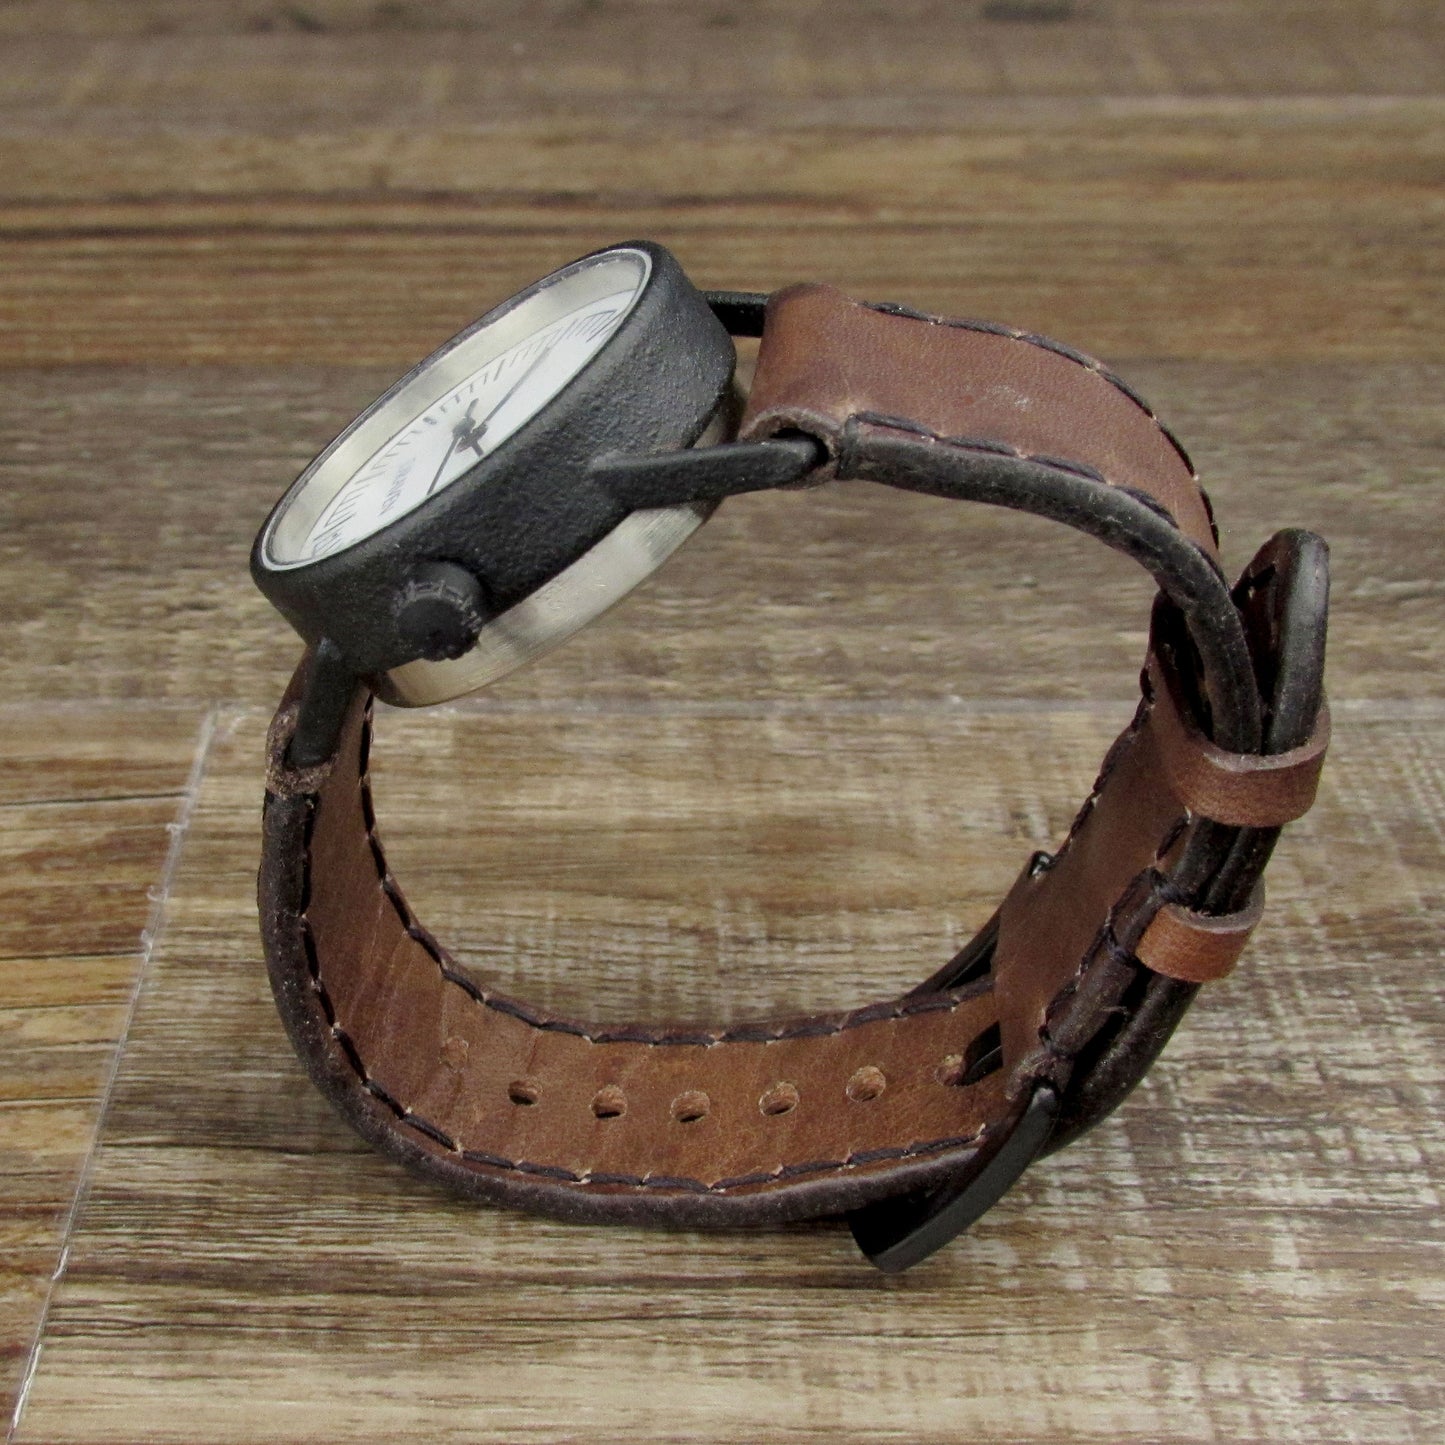 Small Monochromatic Watch Brown Strap